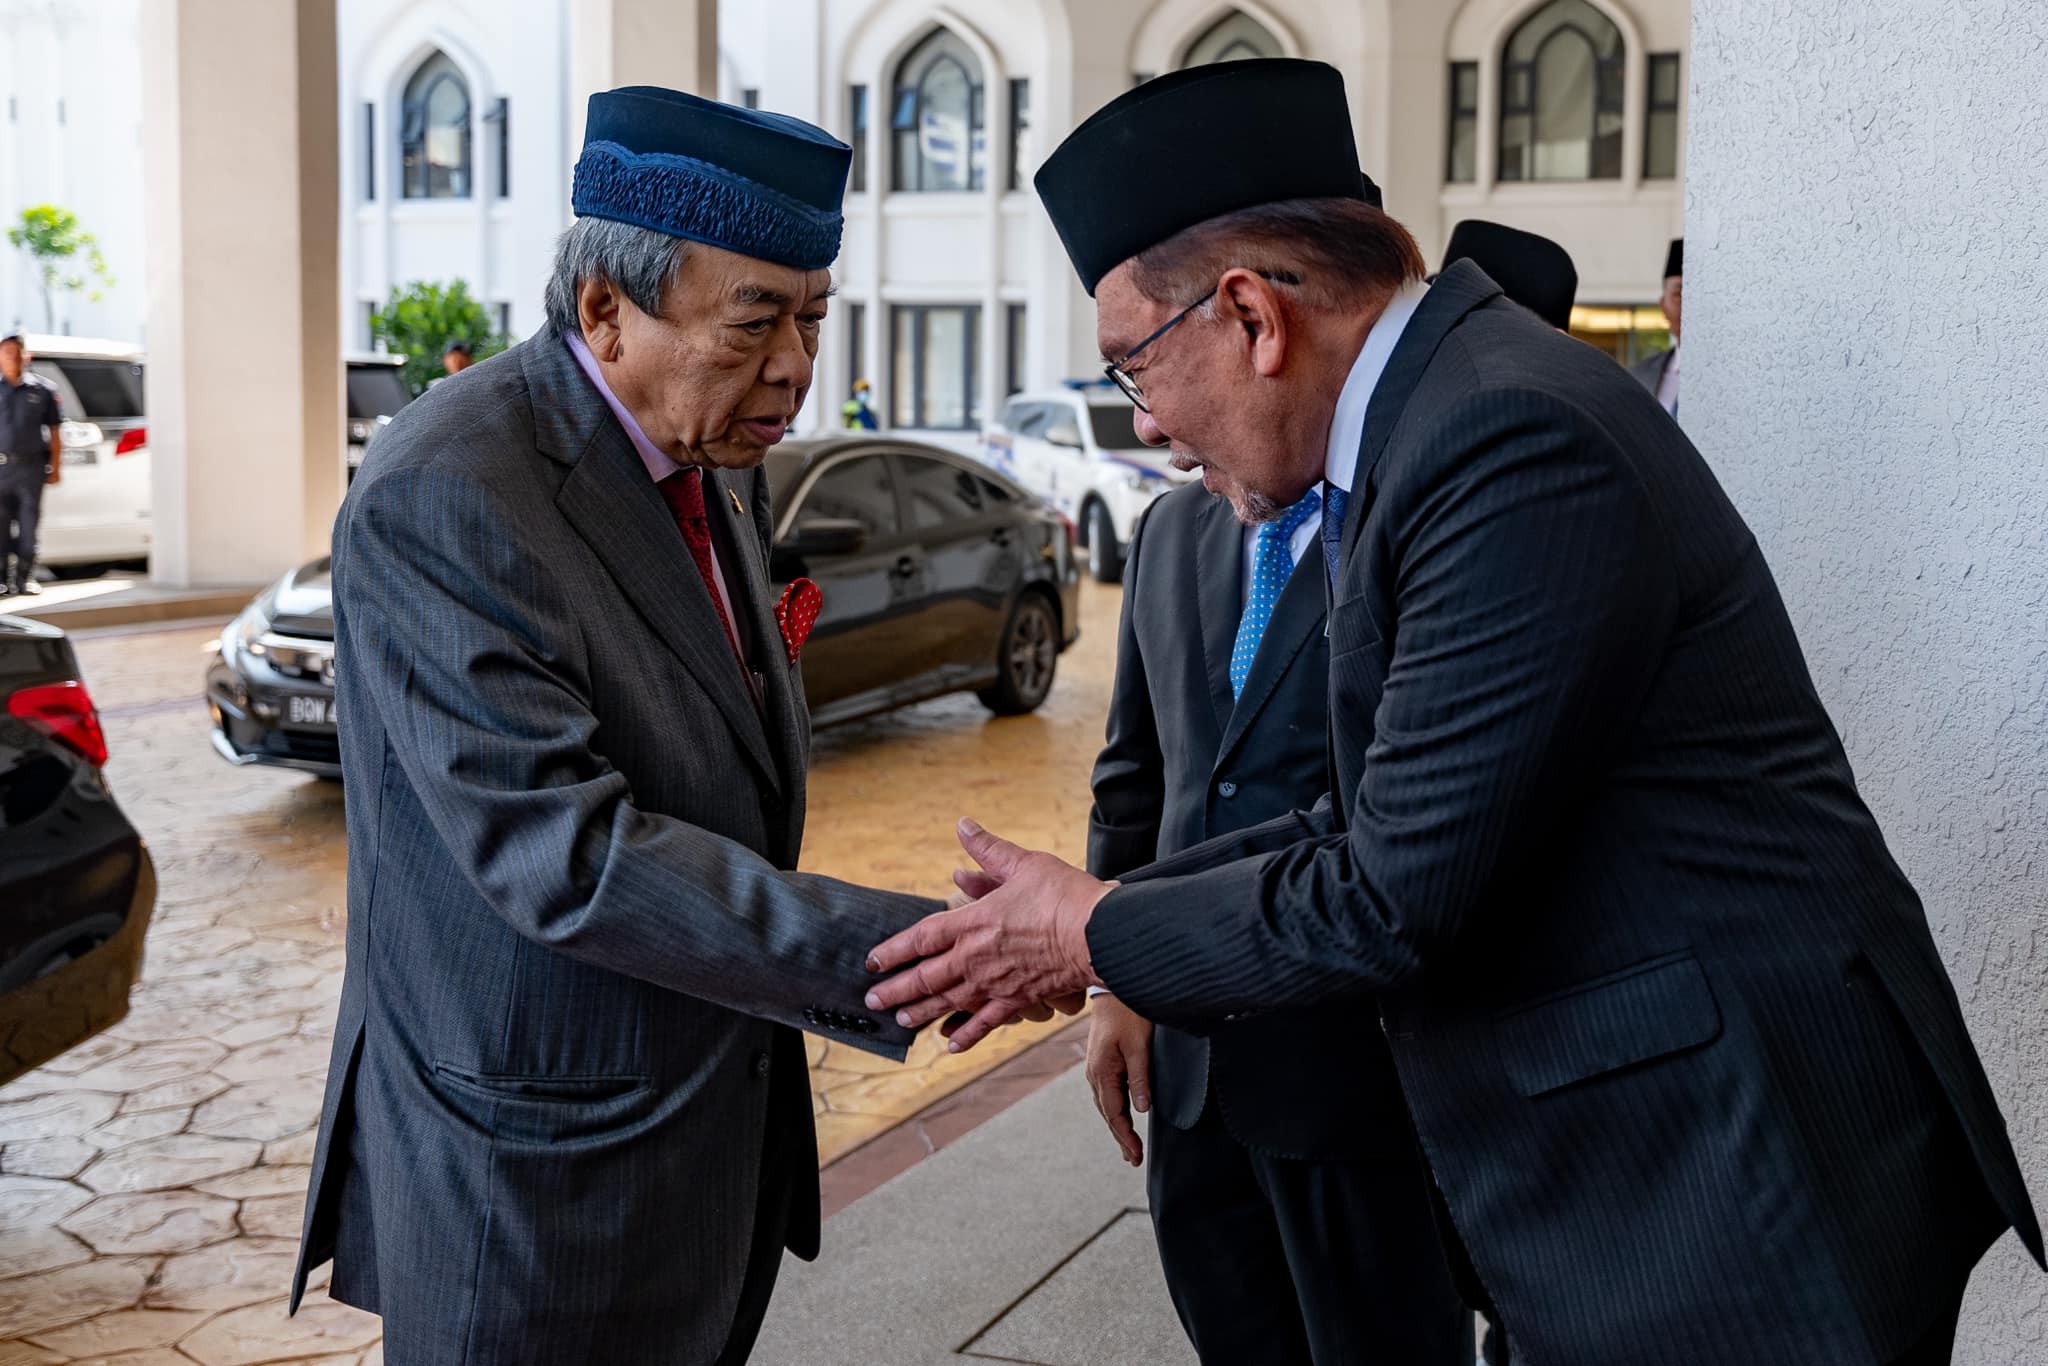 Kerajaan sedia tambah baik hal ehwal Islam di Malaysia agar beri manfaat kepada semua: PM